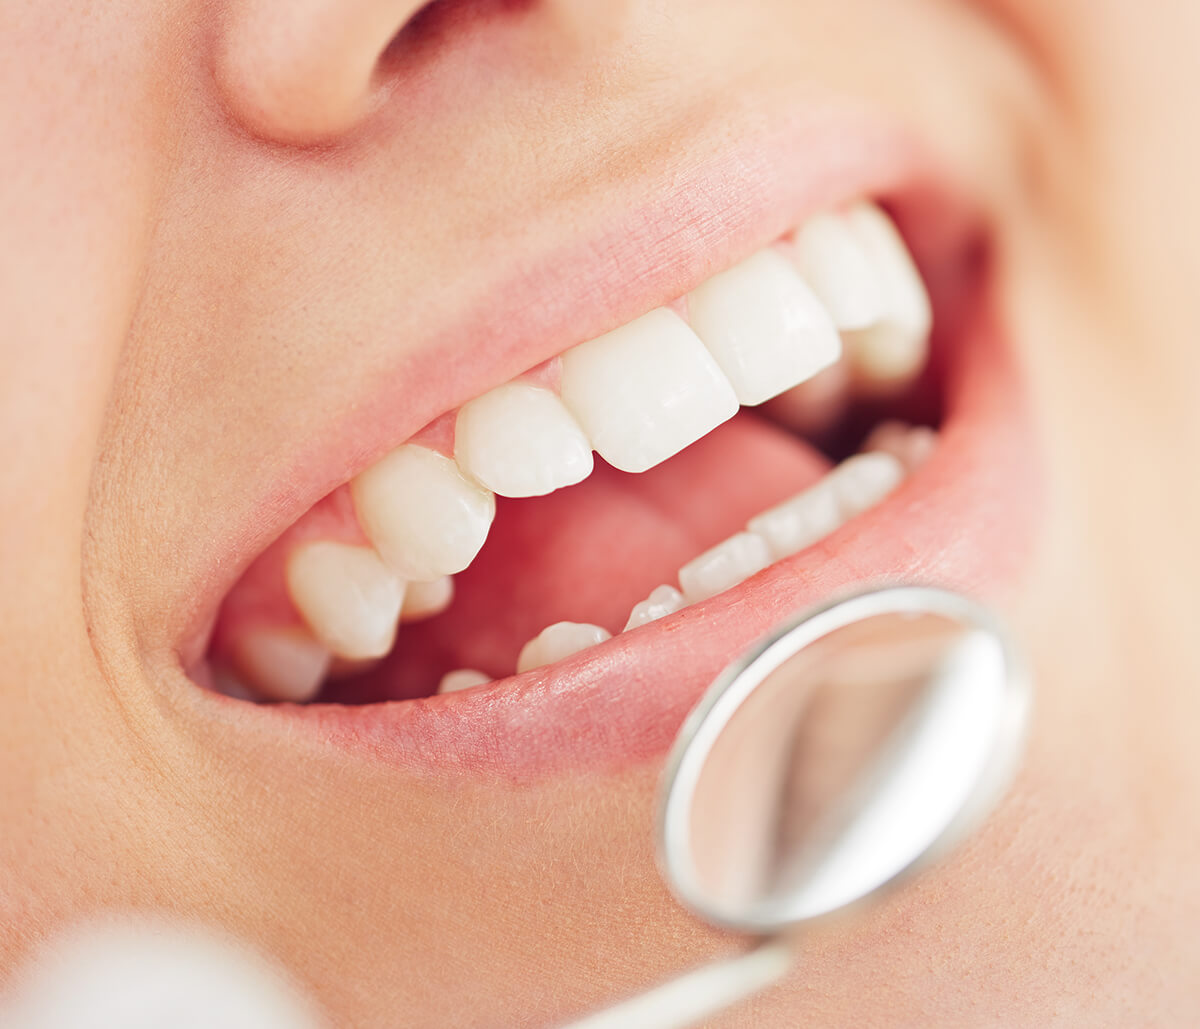 New Research Links Dental Mercury to Arthritis